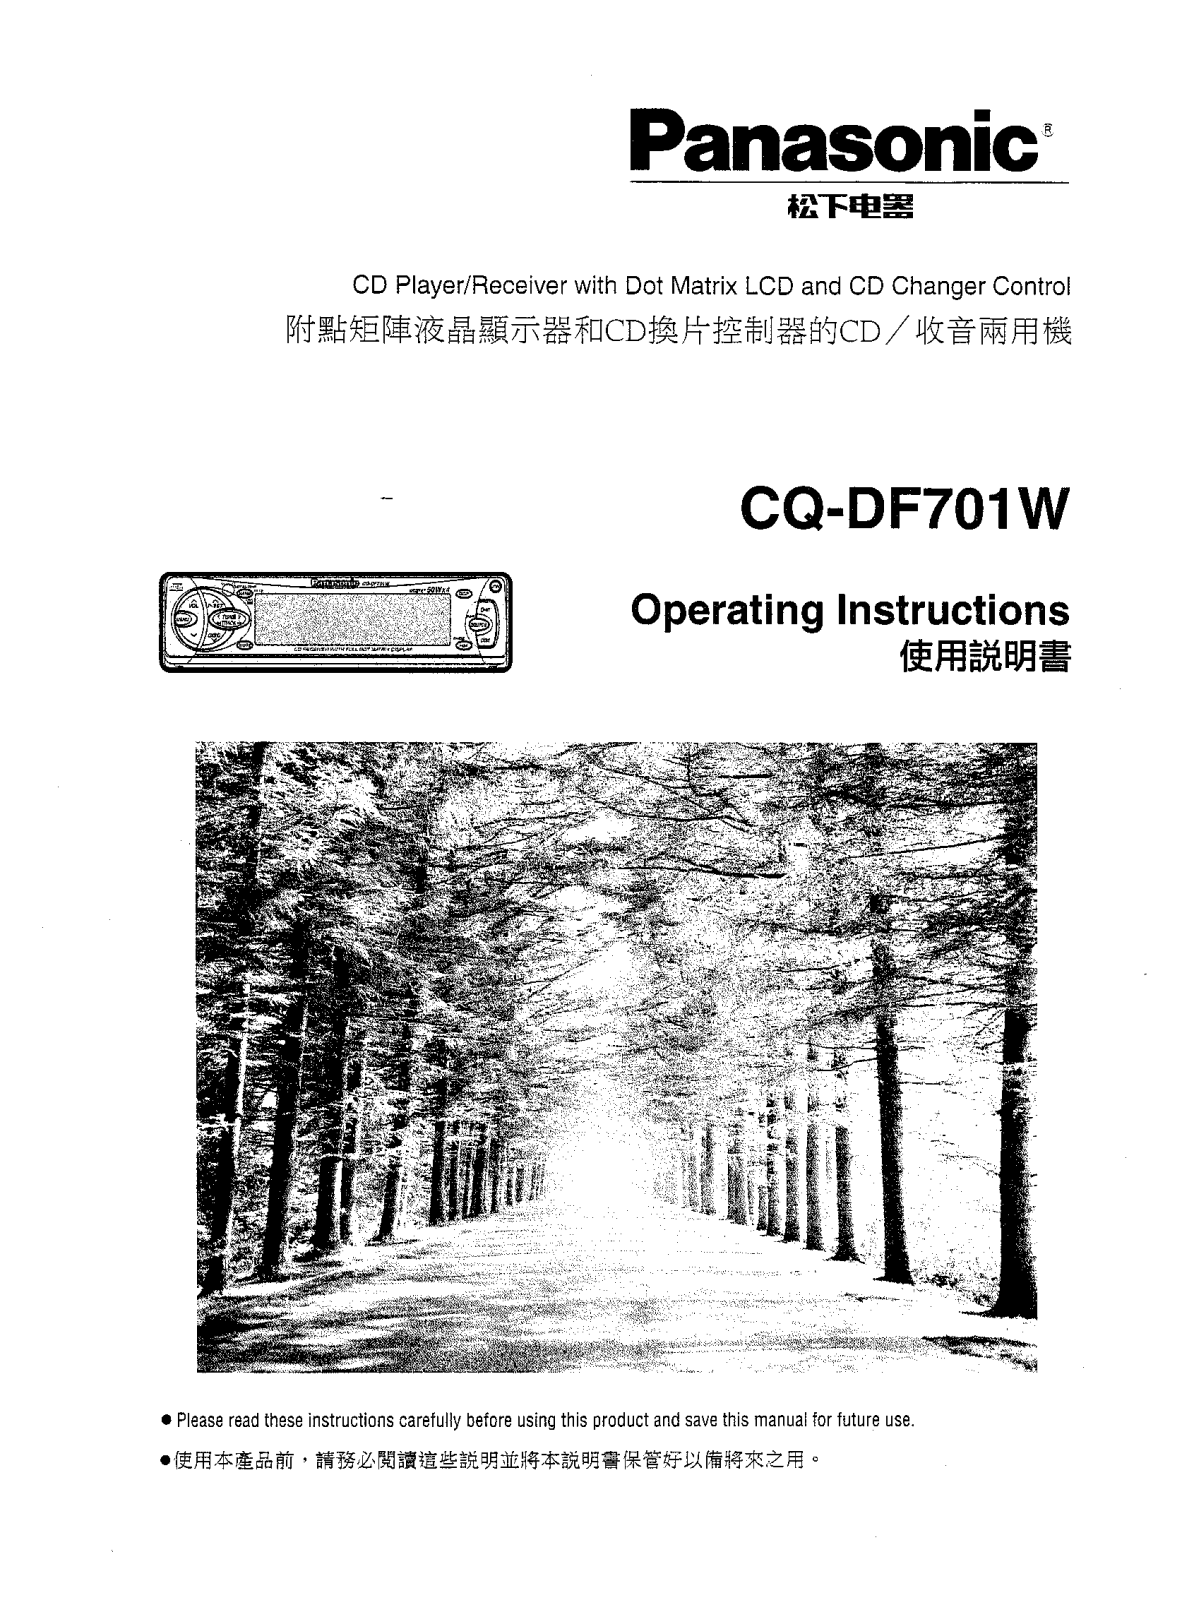 Panasonic CQDF701W Service Manual